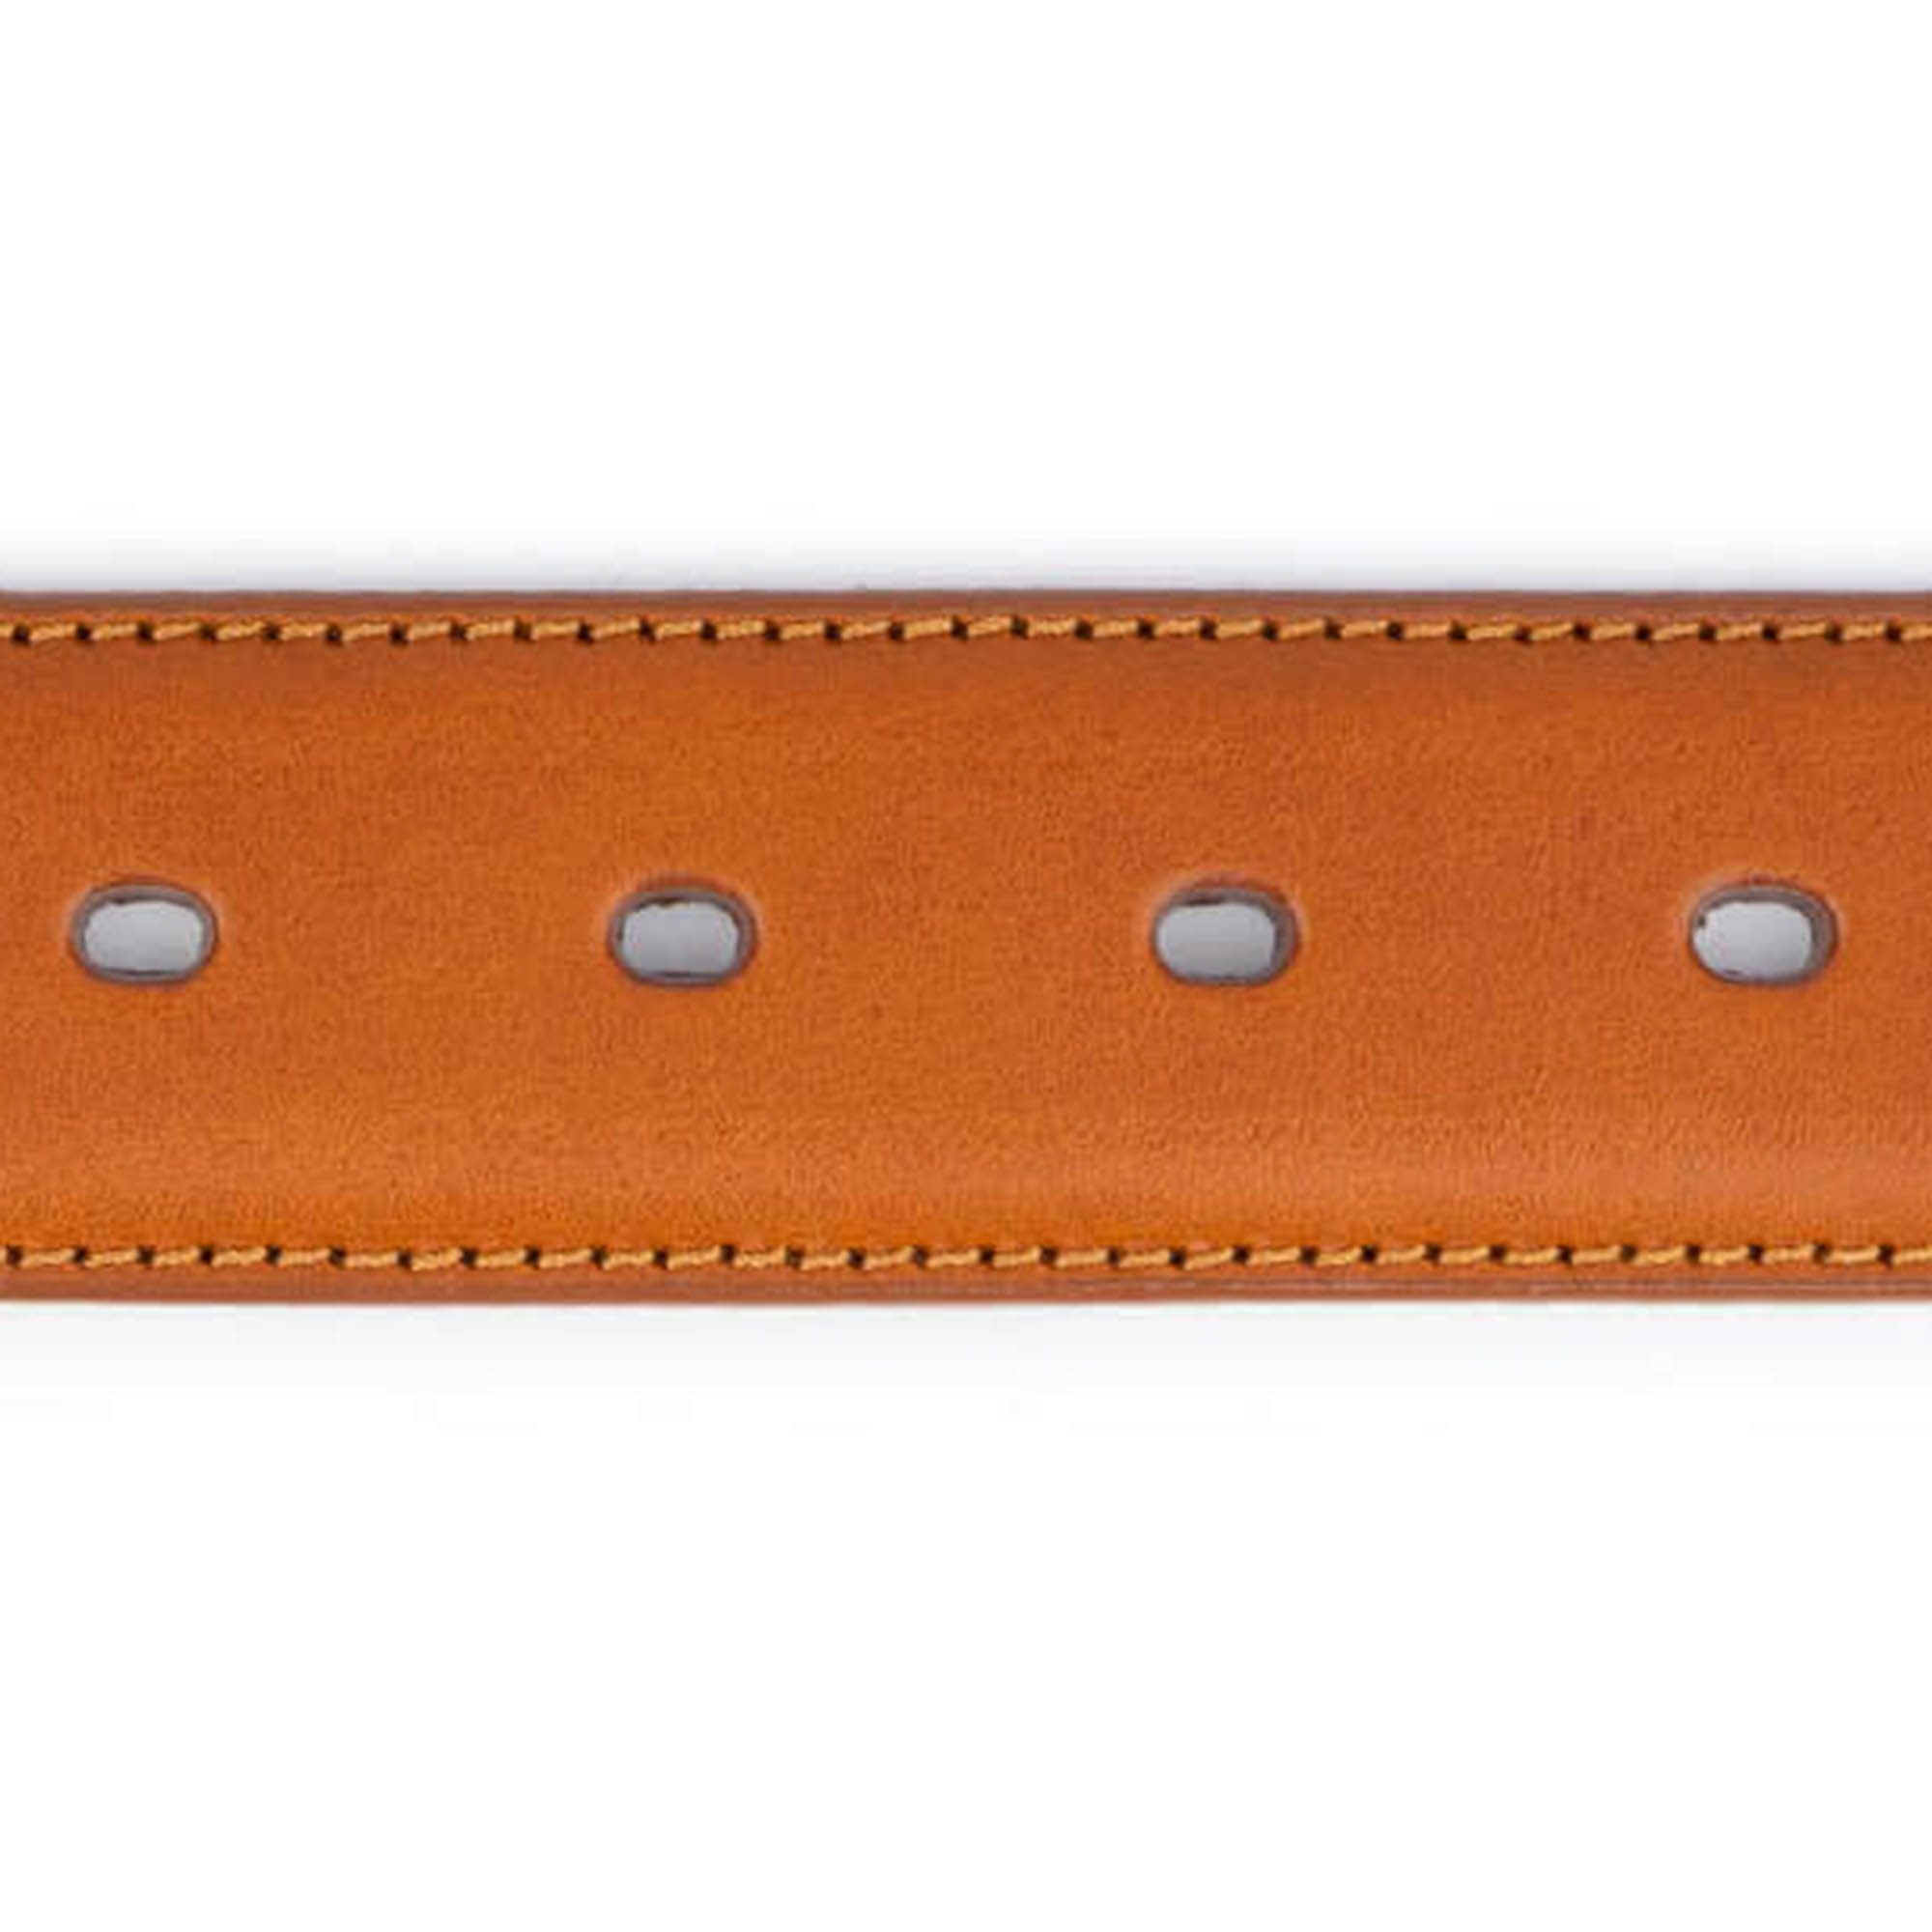 Buy Light Tan Belt Strap Replacement For Designer Buckles ...